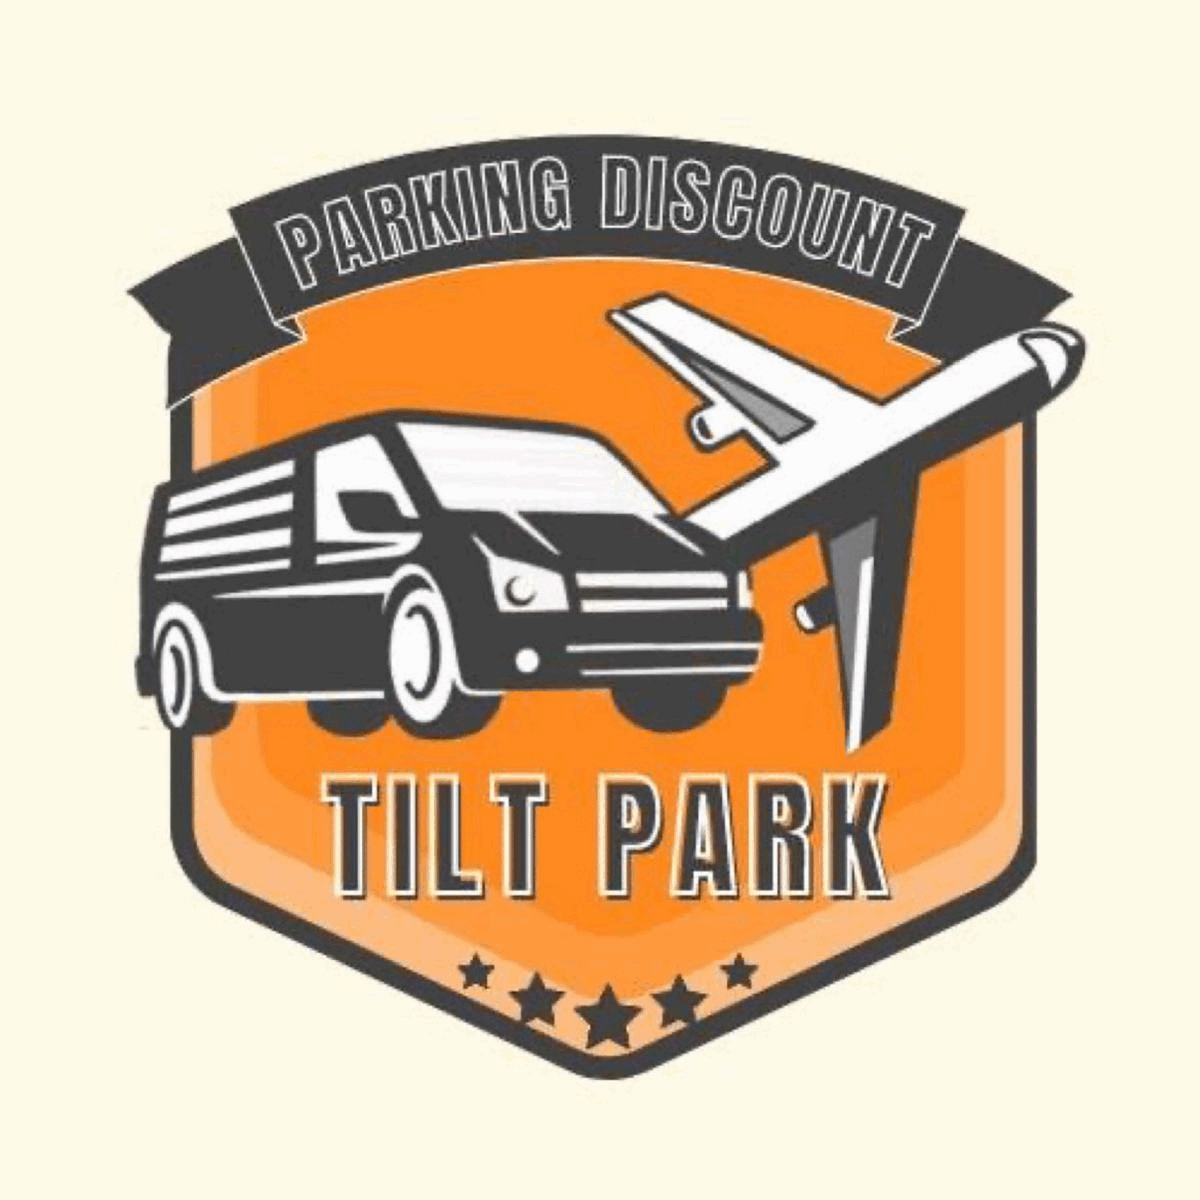 Tilt Park Parking couvert logo